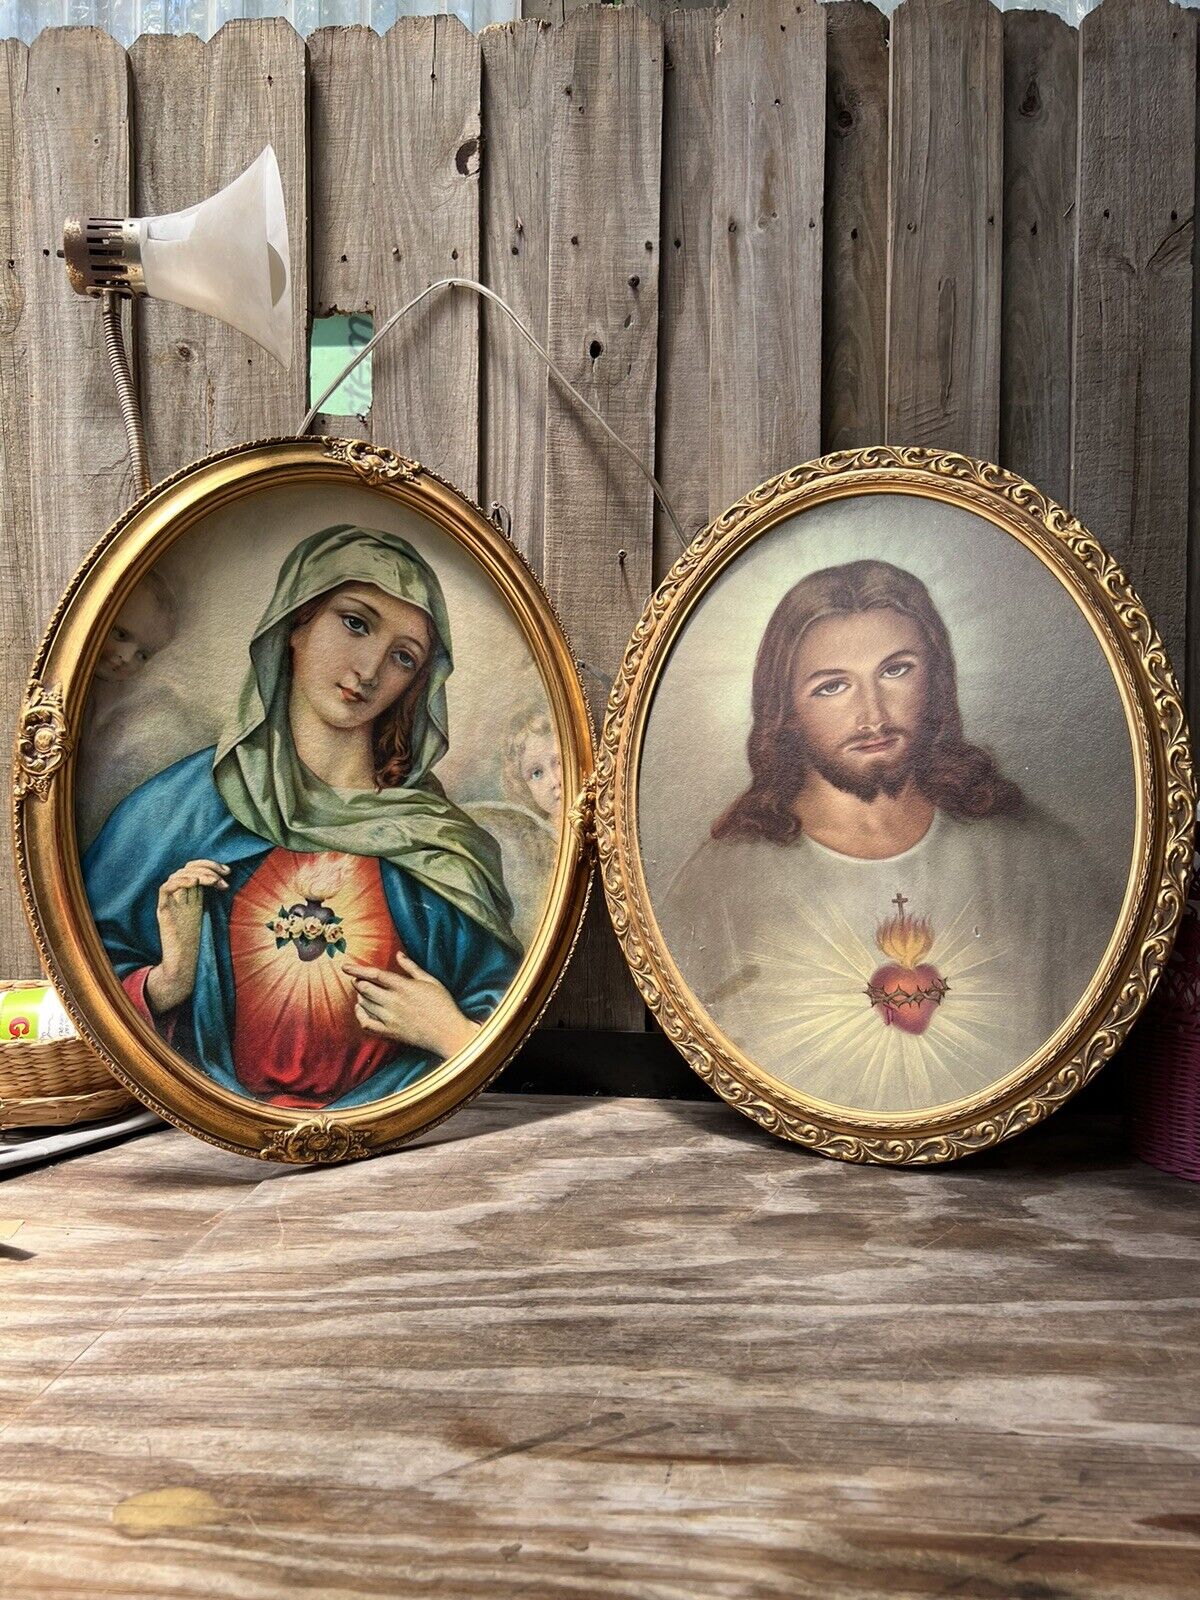 VTG OVAL GOLD LOT FRAMED JESUS SACRED MARY MADONNA RELIGIOUS ARTWORK